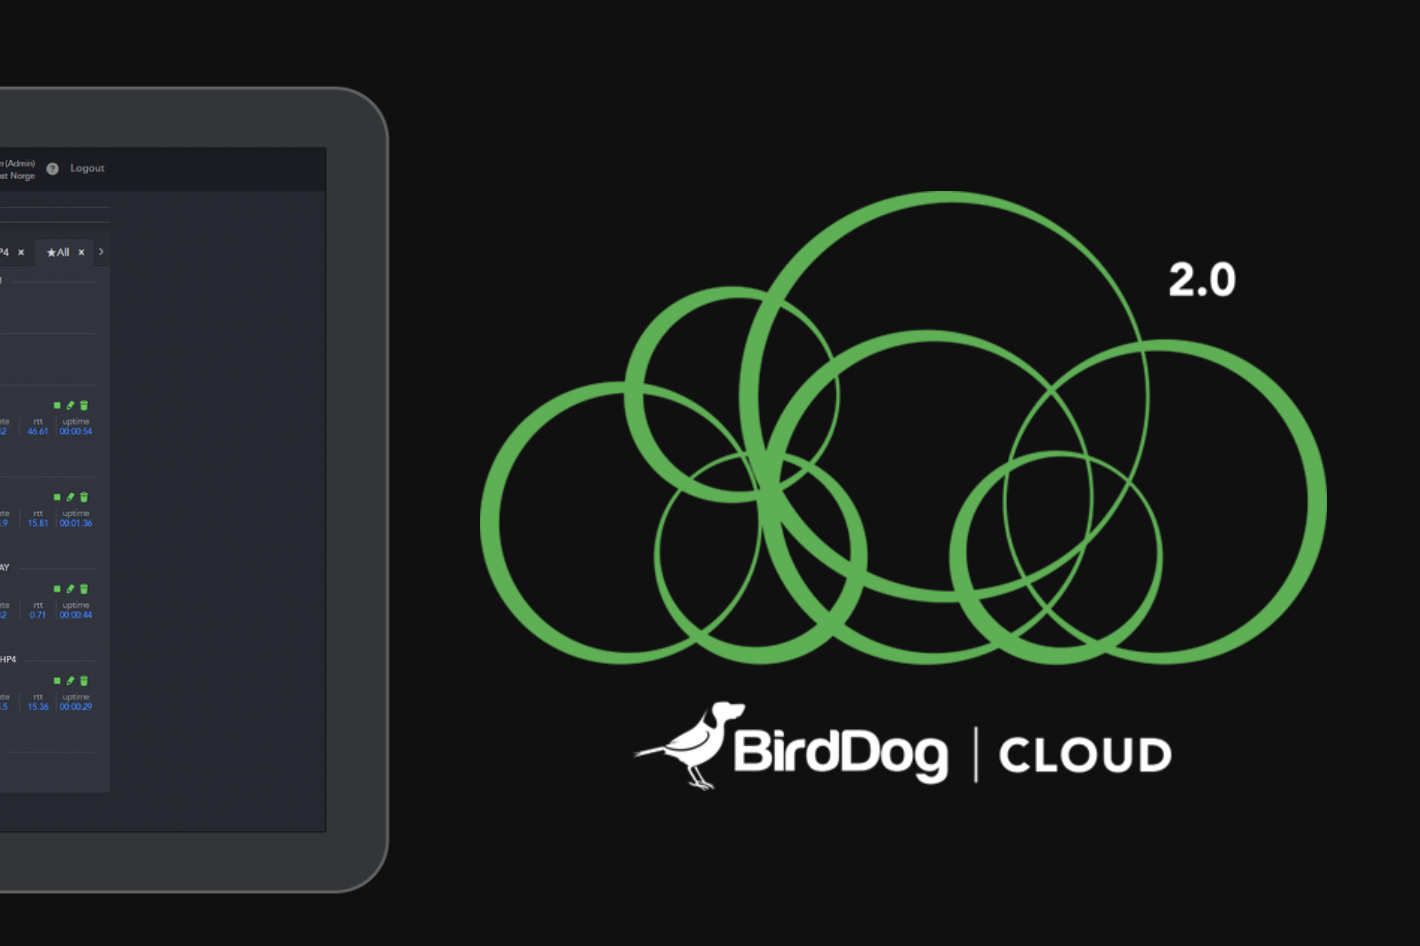 BirdDog will debut Cloud on HPE hardware at NAB Show